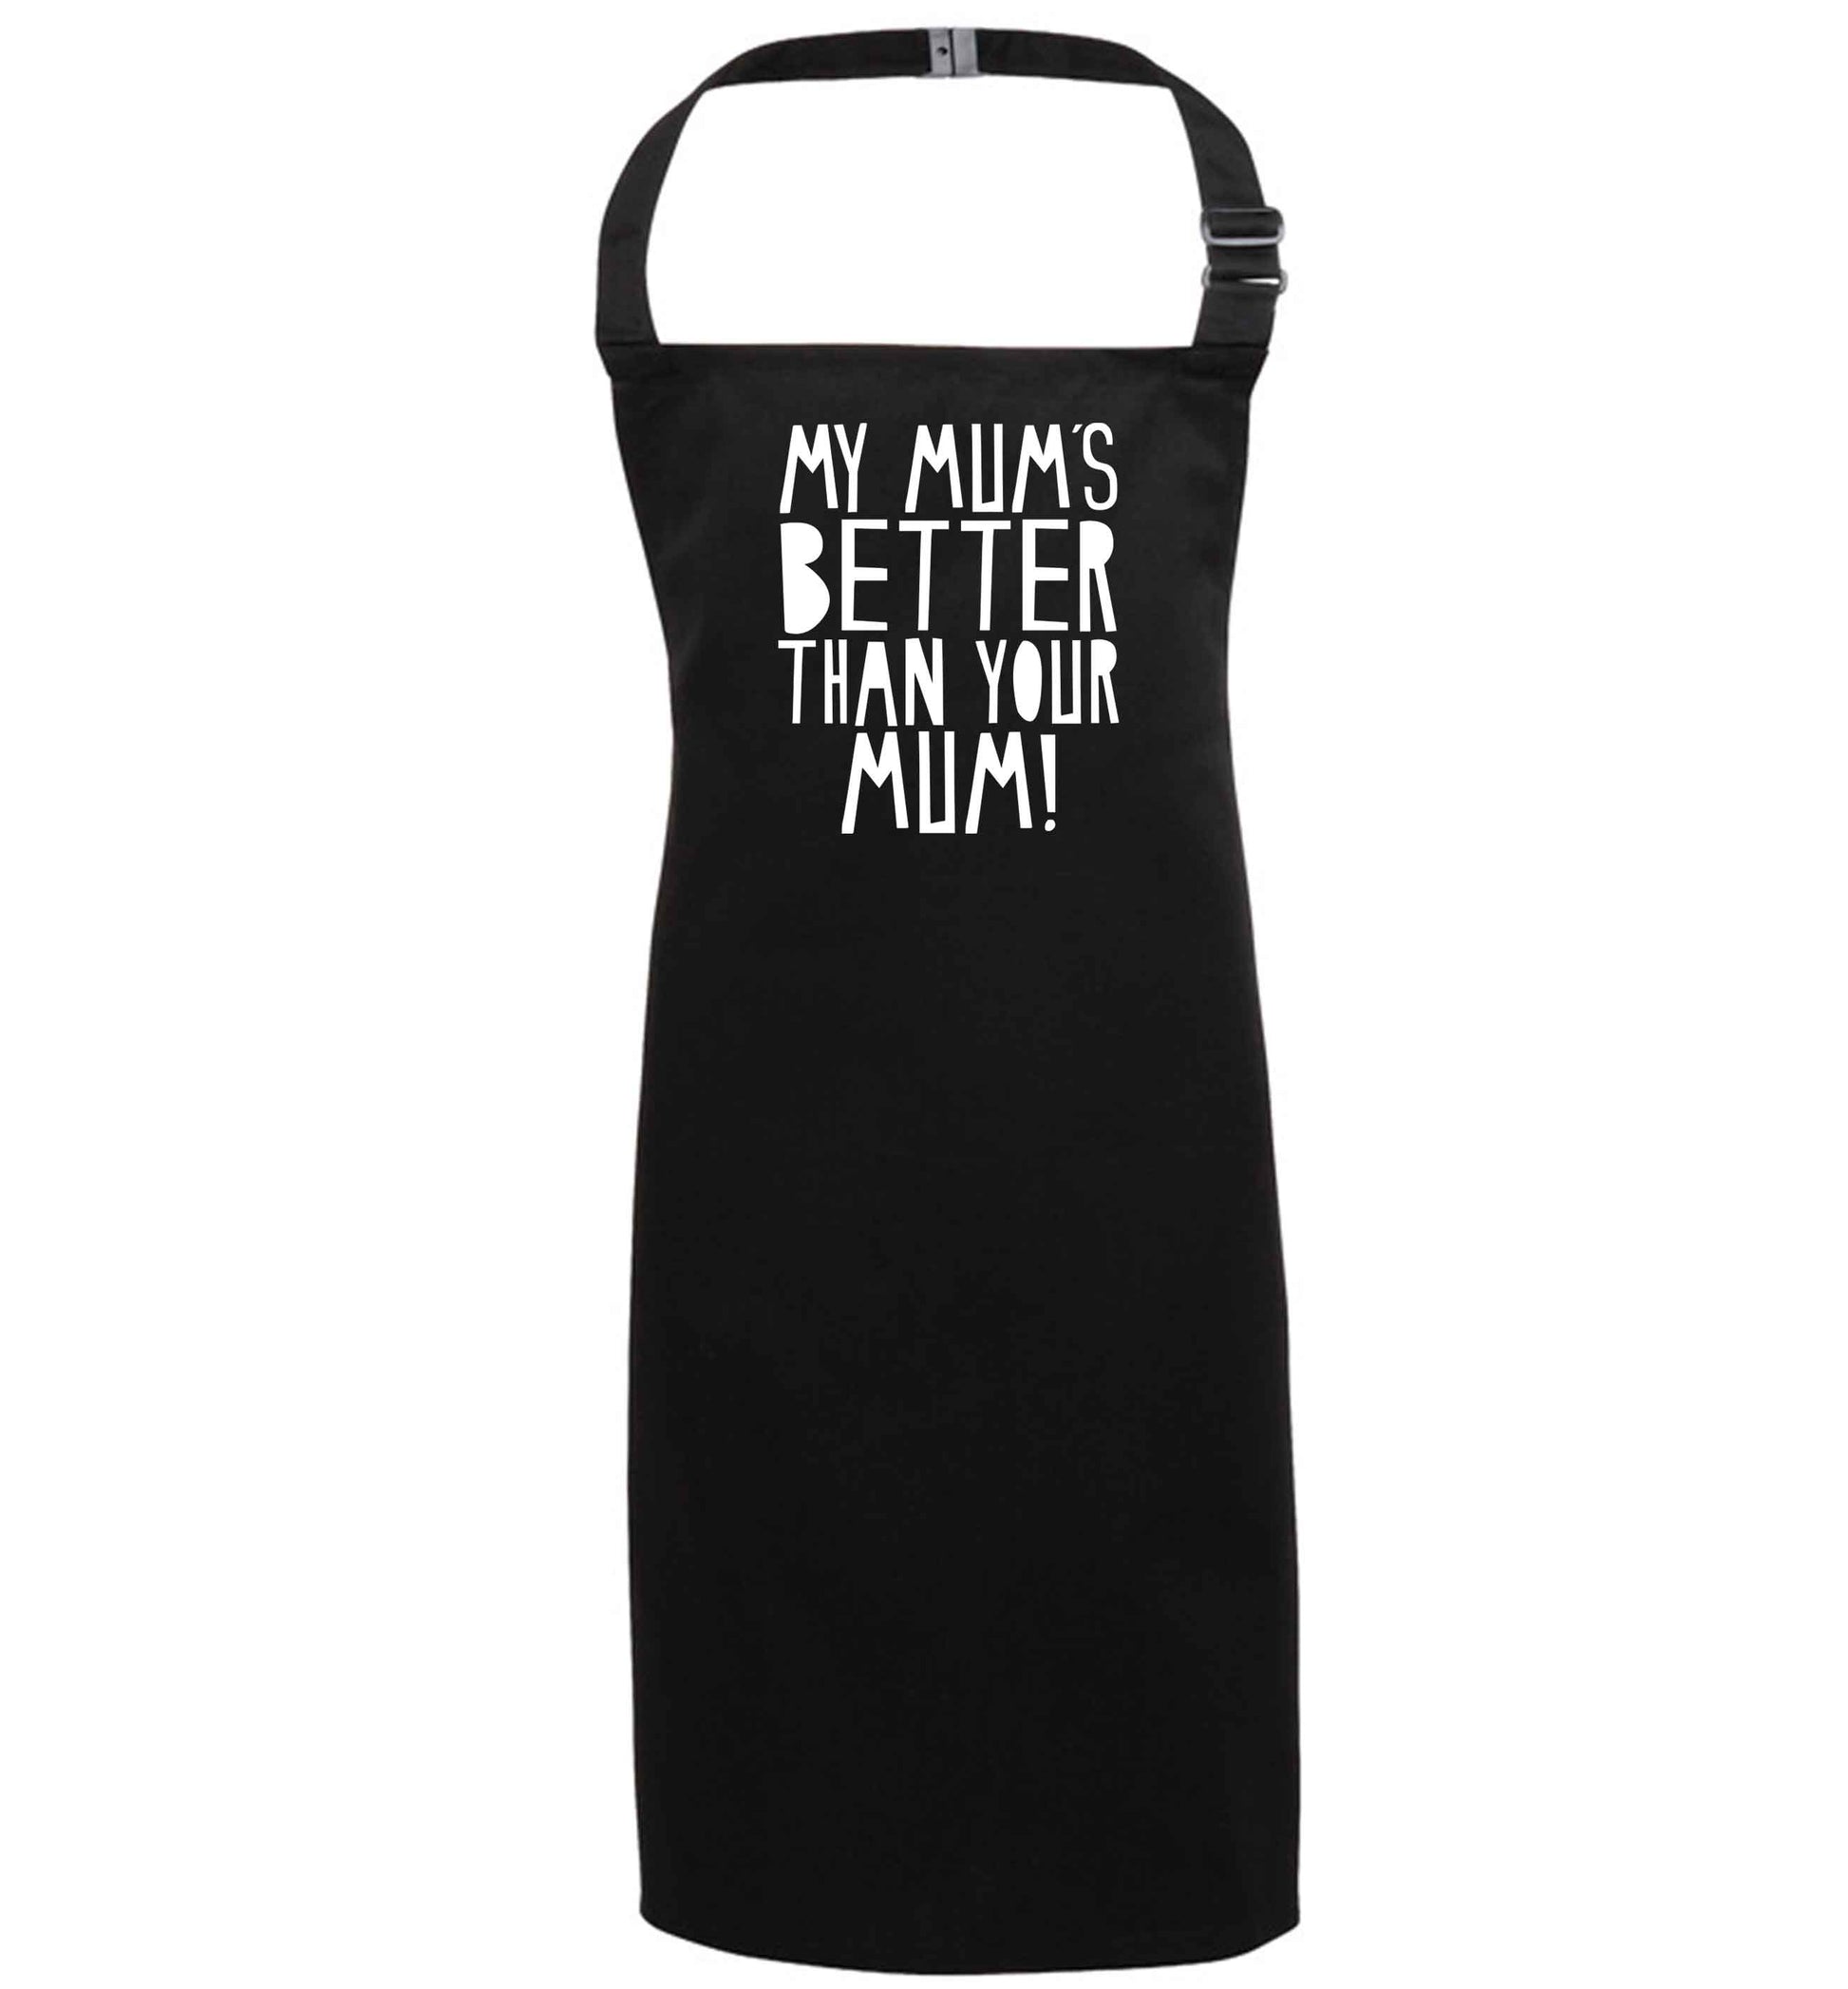 My mum's better than your mum black apron 7-10 years